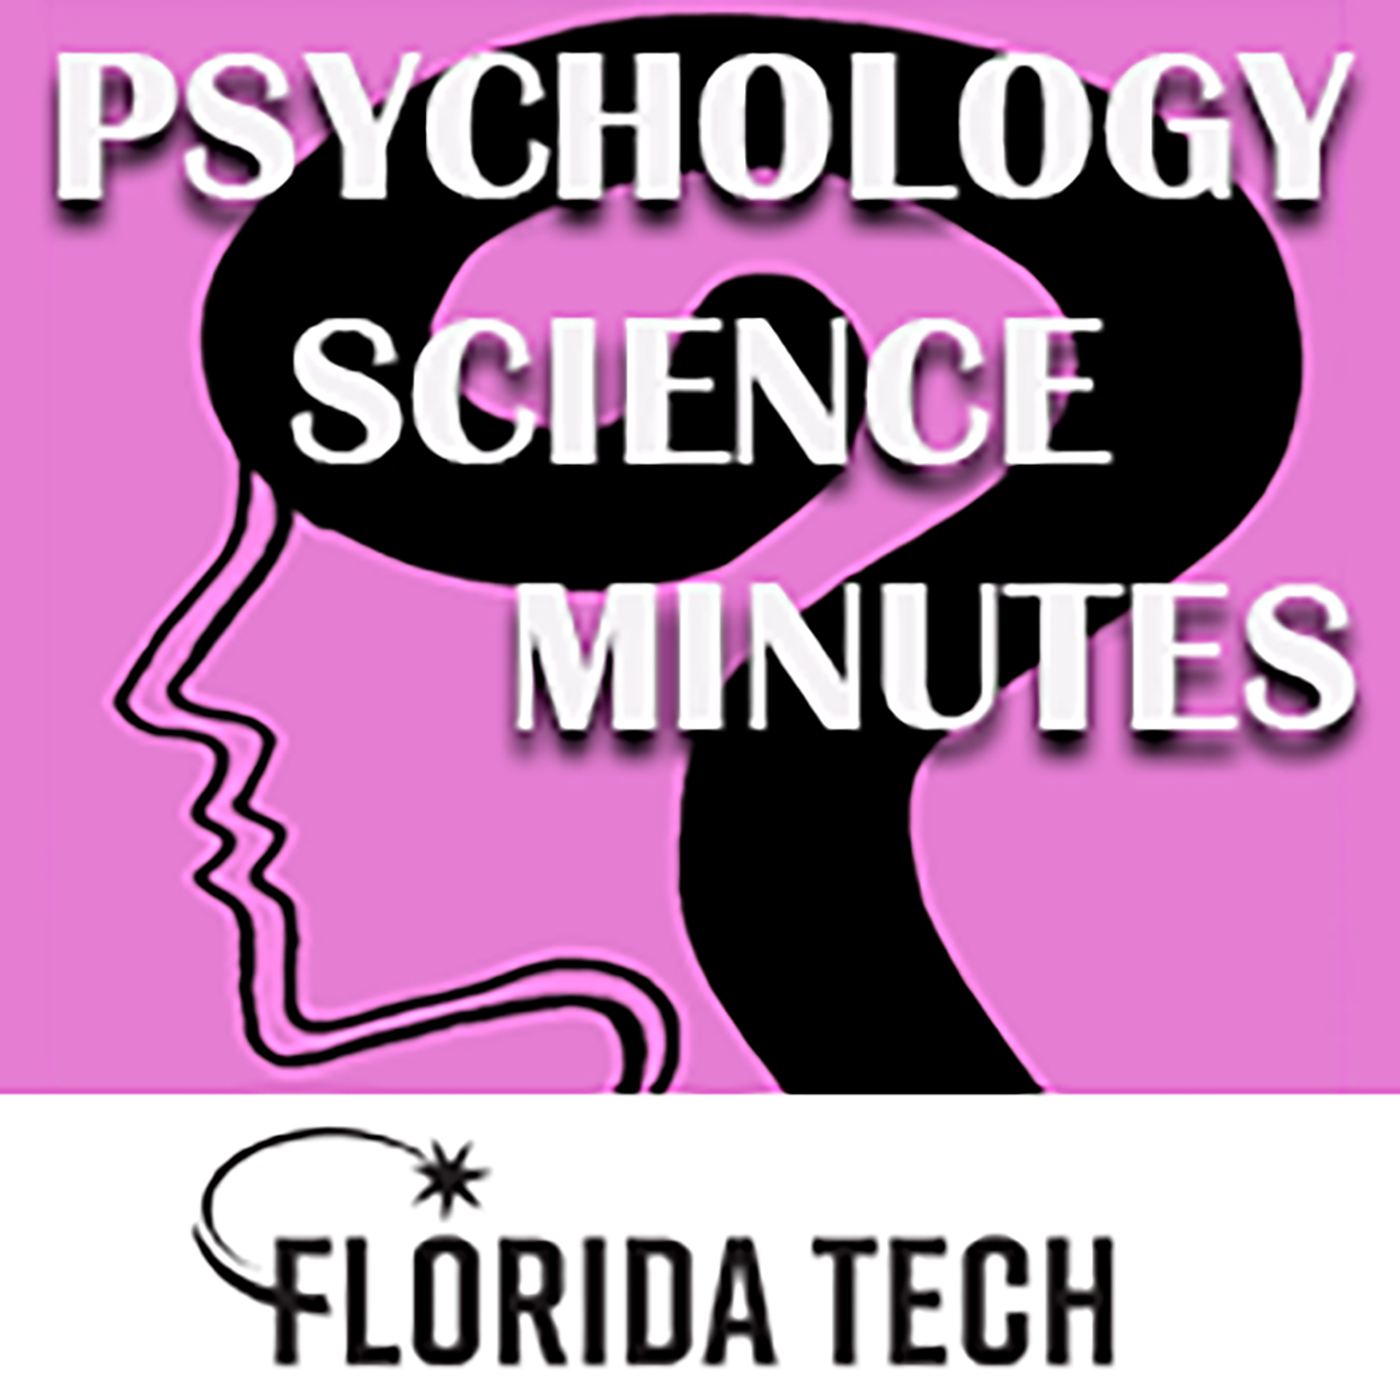 Florida Tech Psychology Science Minutes